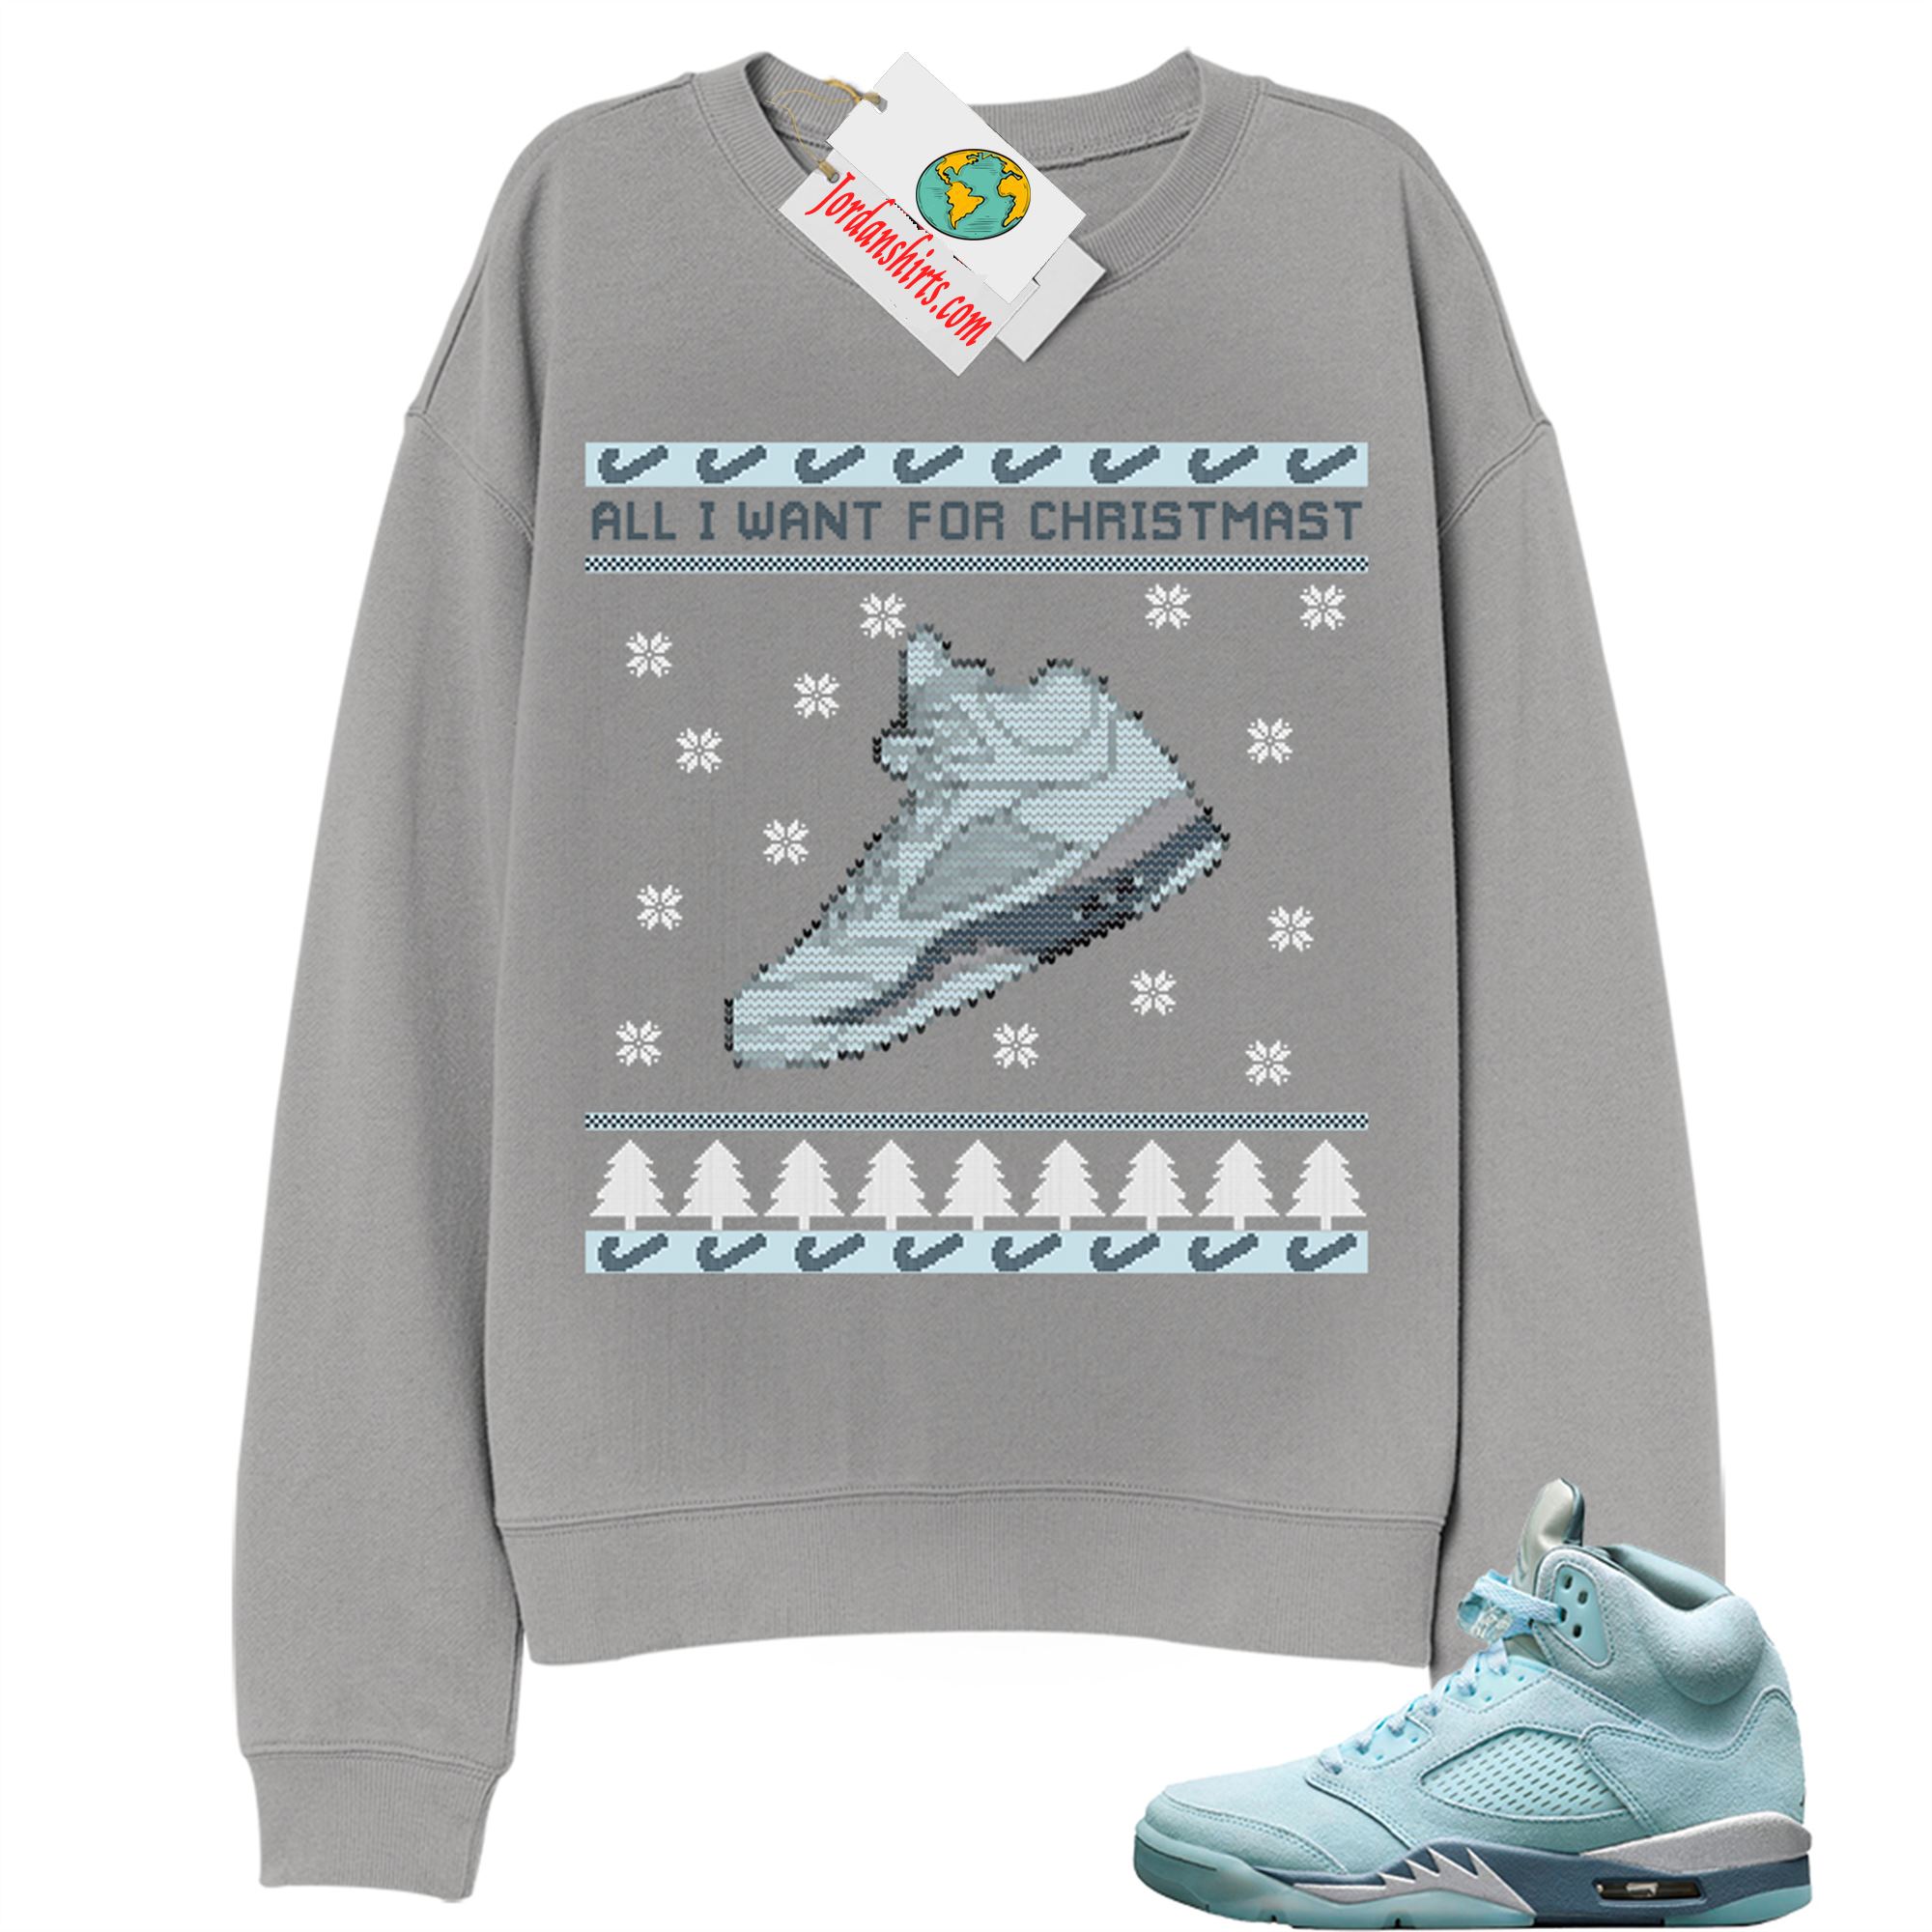 Jordan 5 Sweatshirt, Sneaker Ugly Christmas Shirt Grey Sweatshirt Air Jordan 5 Bluebird 5s Plus Size Up To 5xl